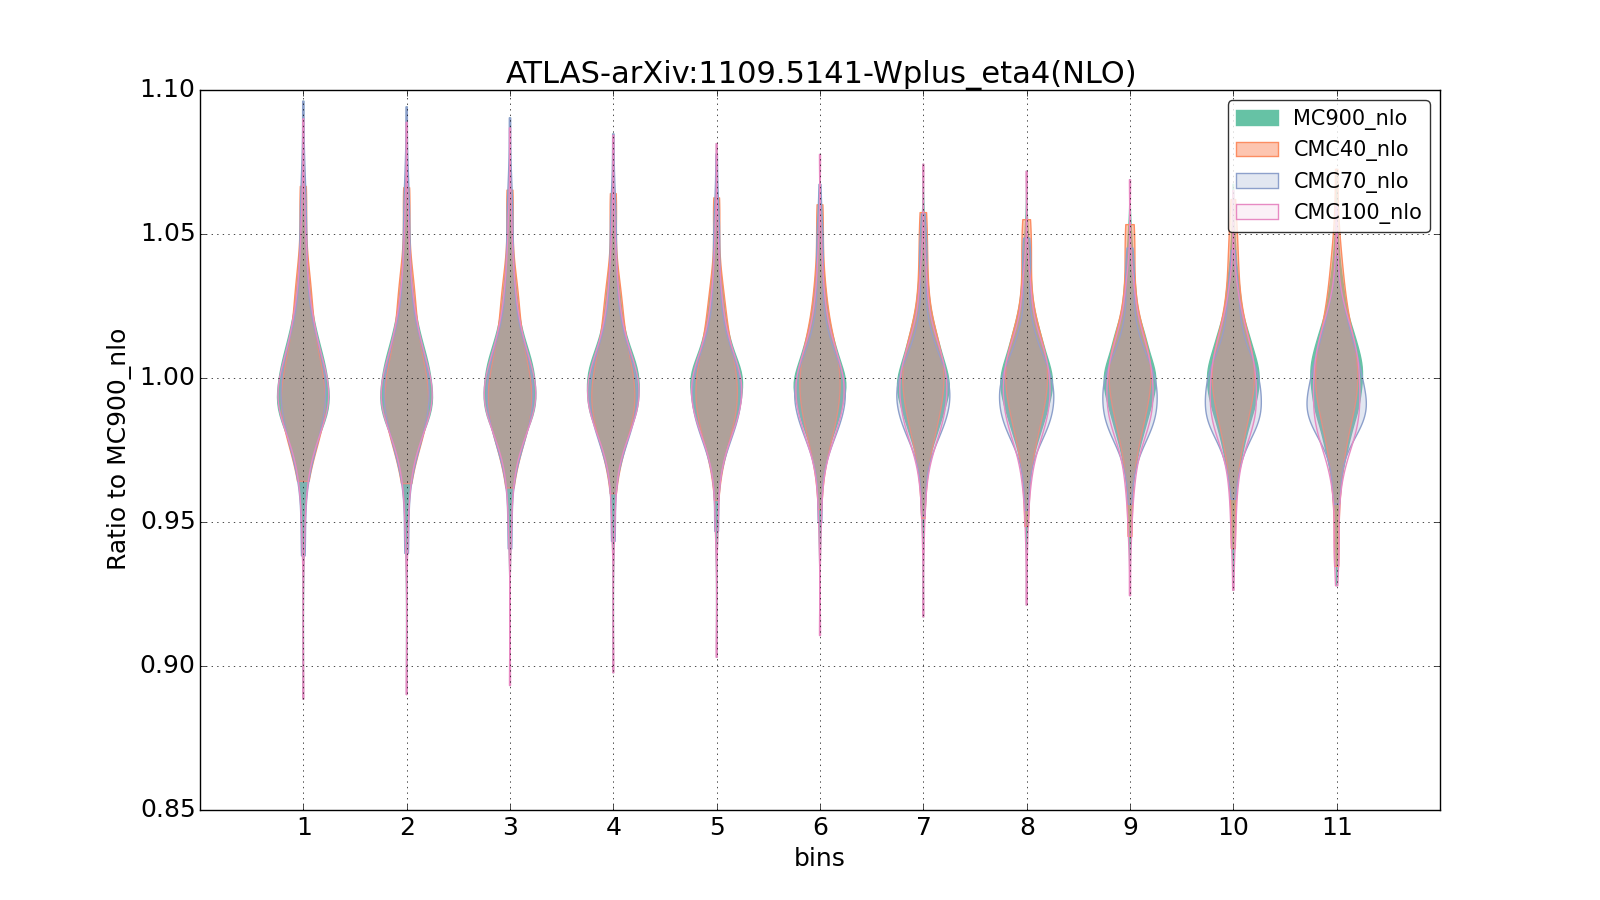 figure plots/CMCpheno/group_1_violinplot_ATLAS-arXiv:11095141-Wplus_eta4(NLO).png